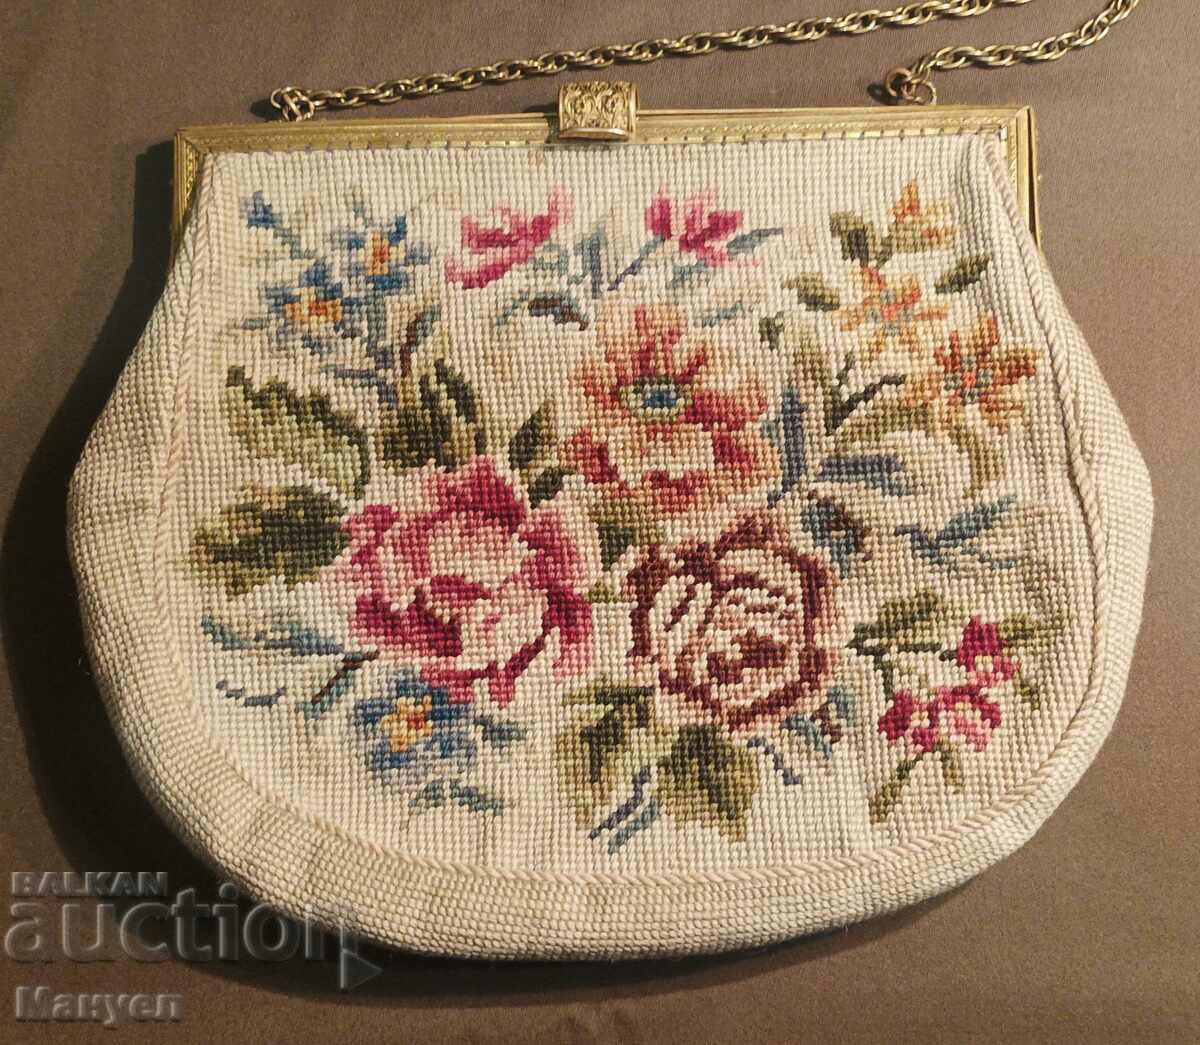 Old handbag "Art Nouveau".